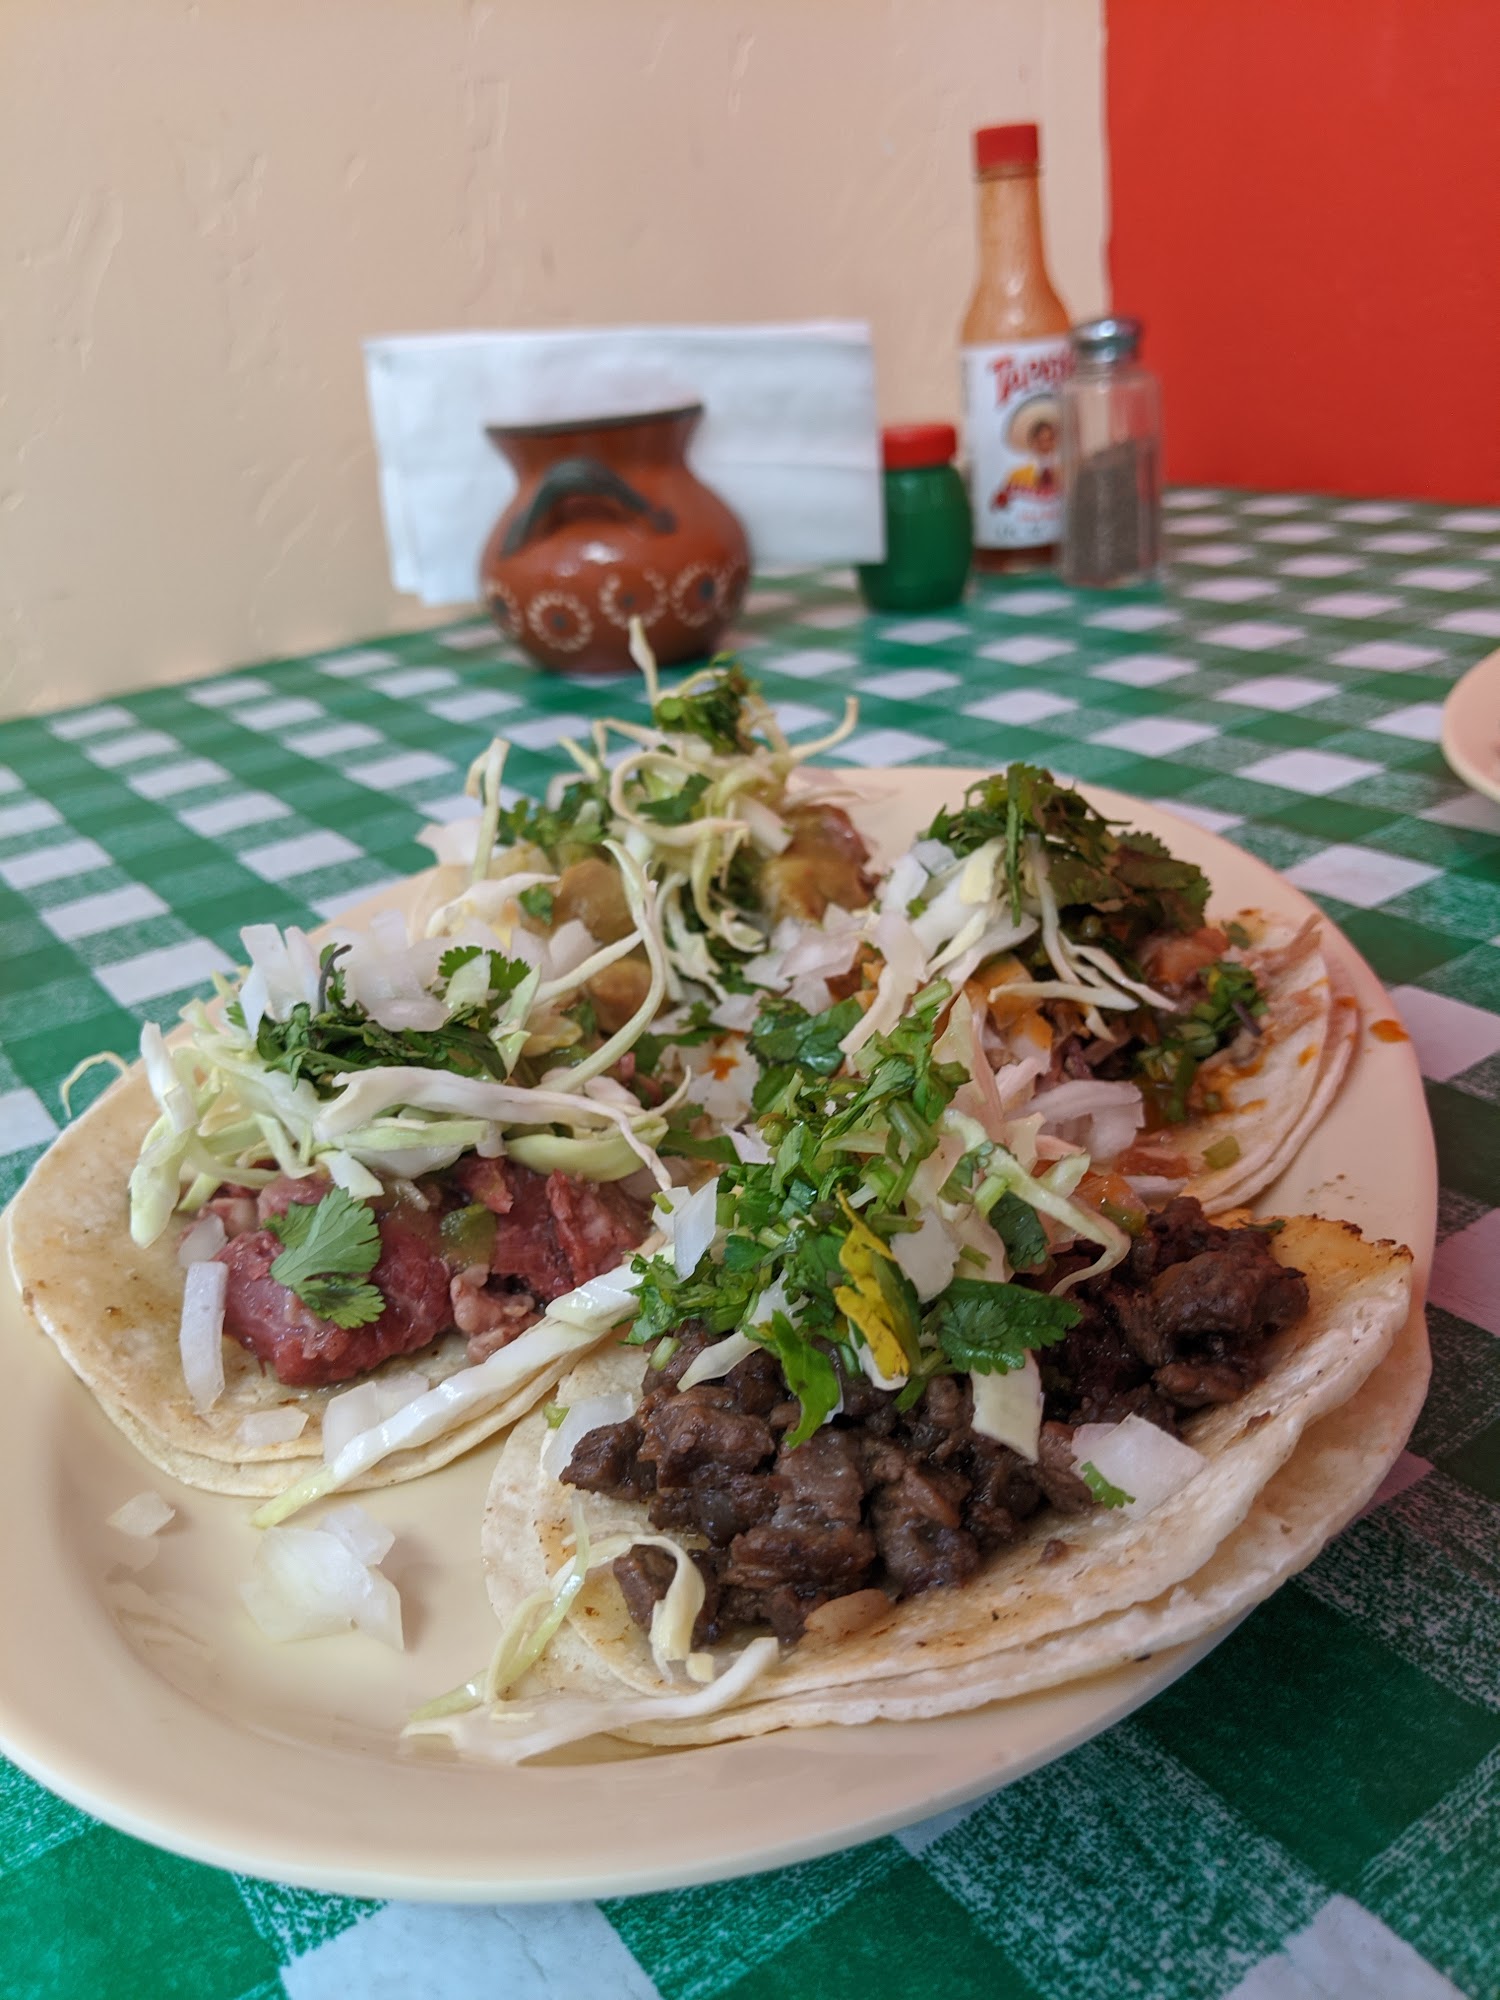 Tacos Goyo